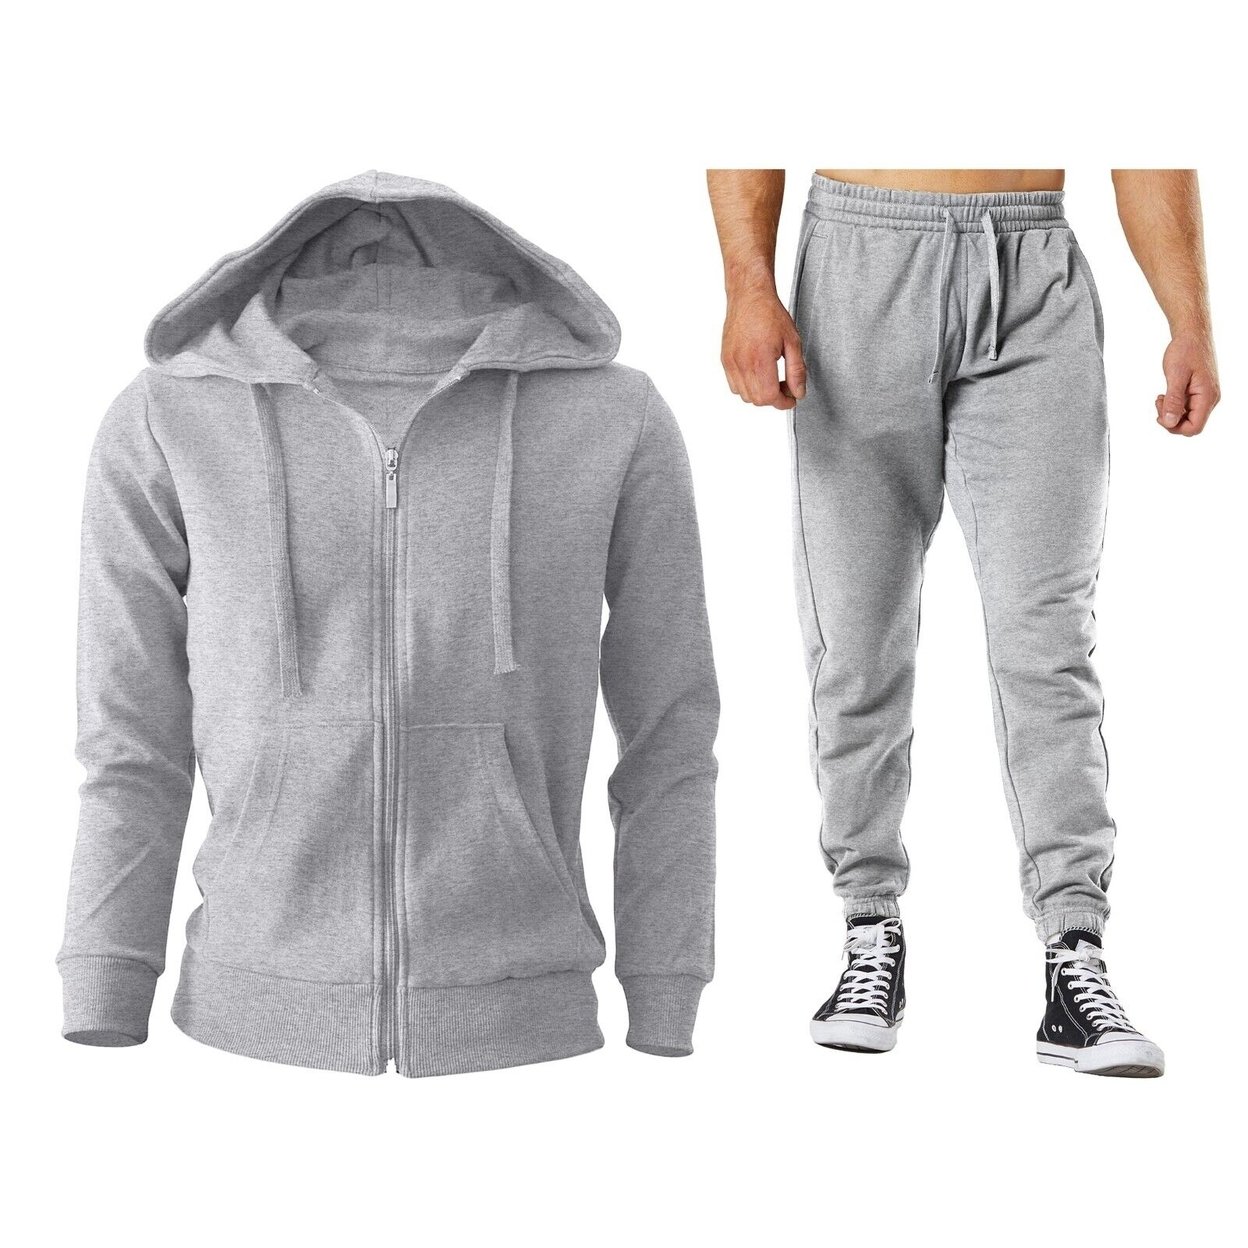 4-Piece: Men's Winter Warm Cozy Athletic Multi-Pockets BIG & TALL Sweatsuit Set - Grey, Small